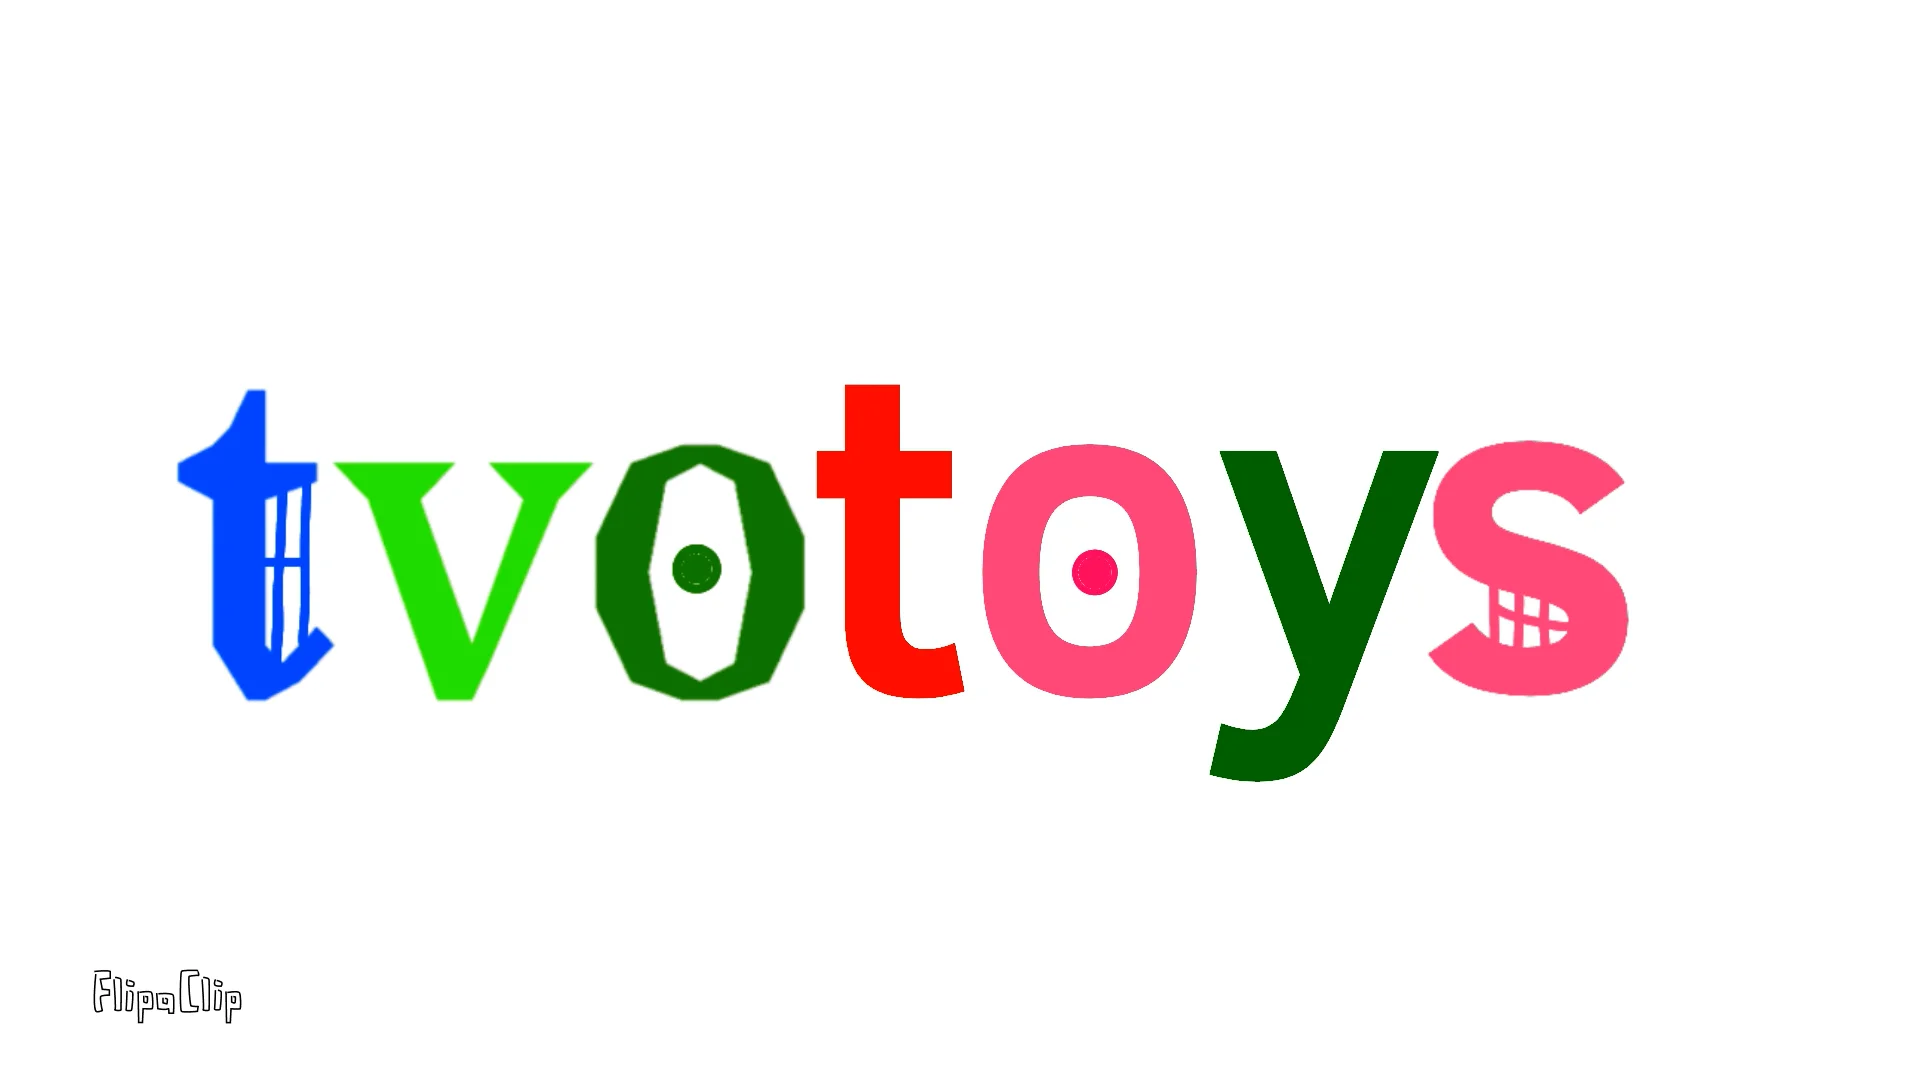 TVOKids, Logopedia